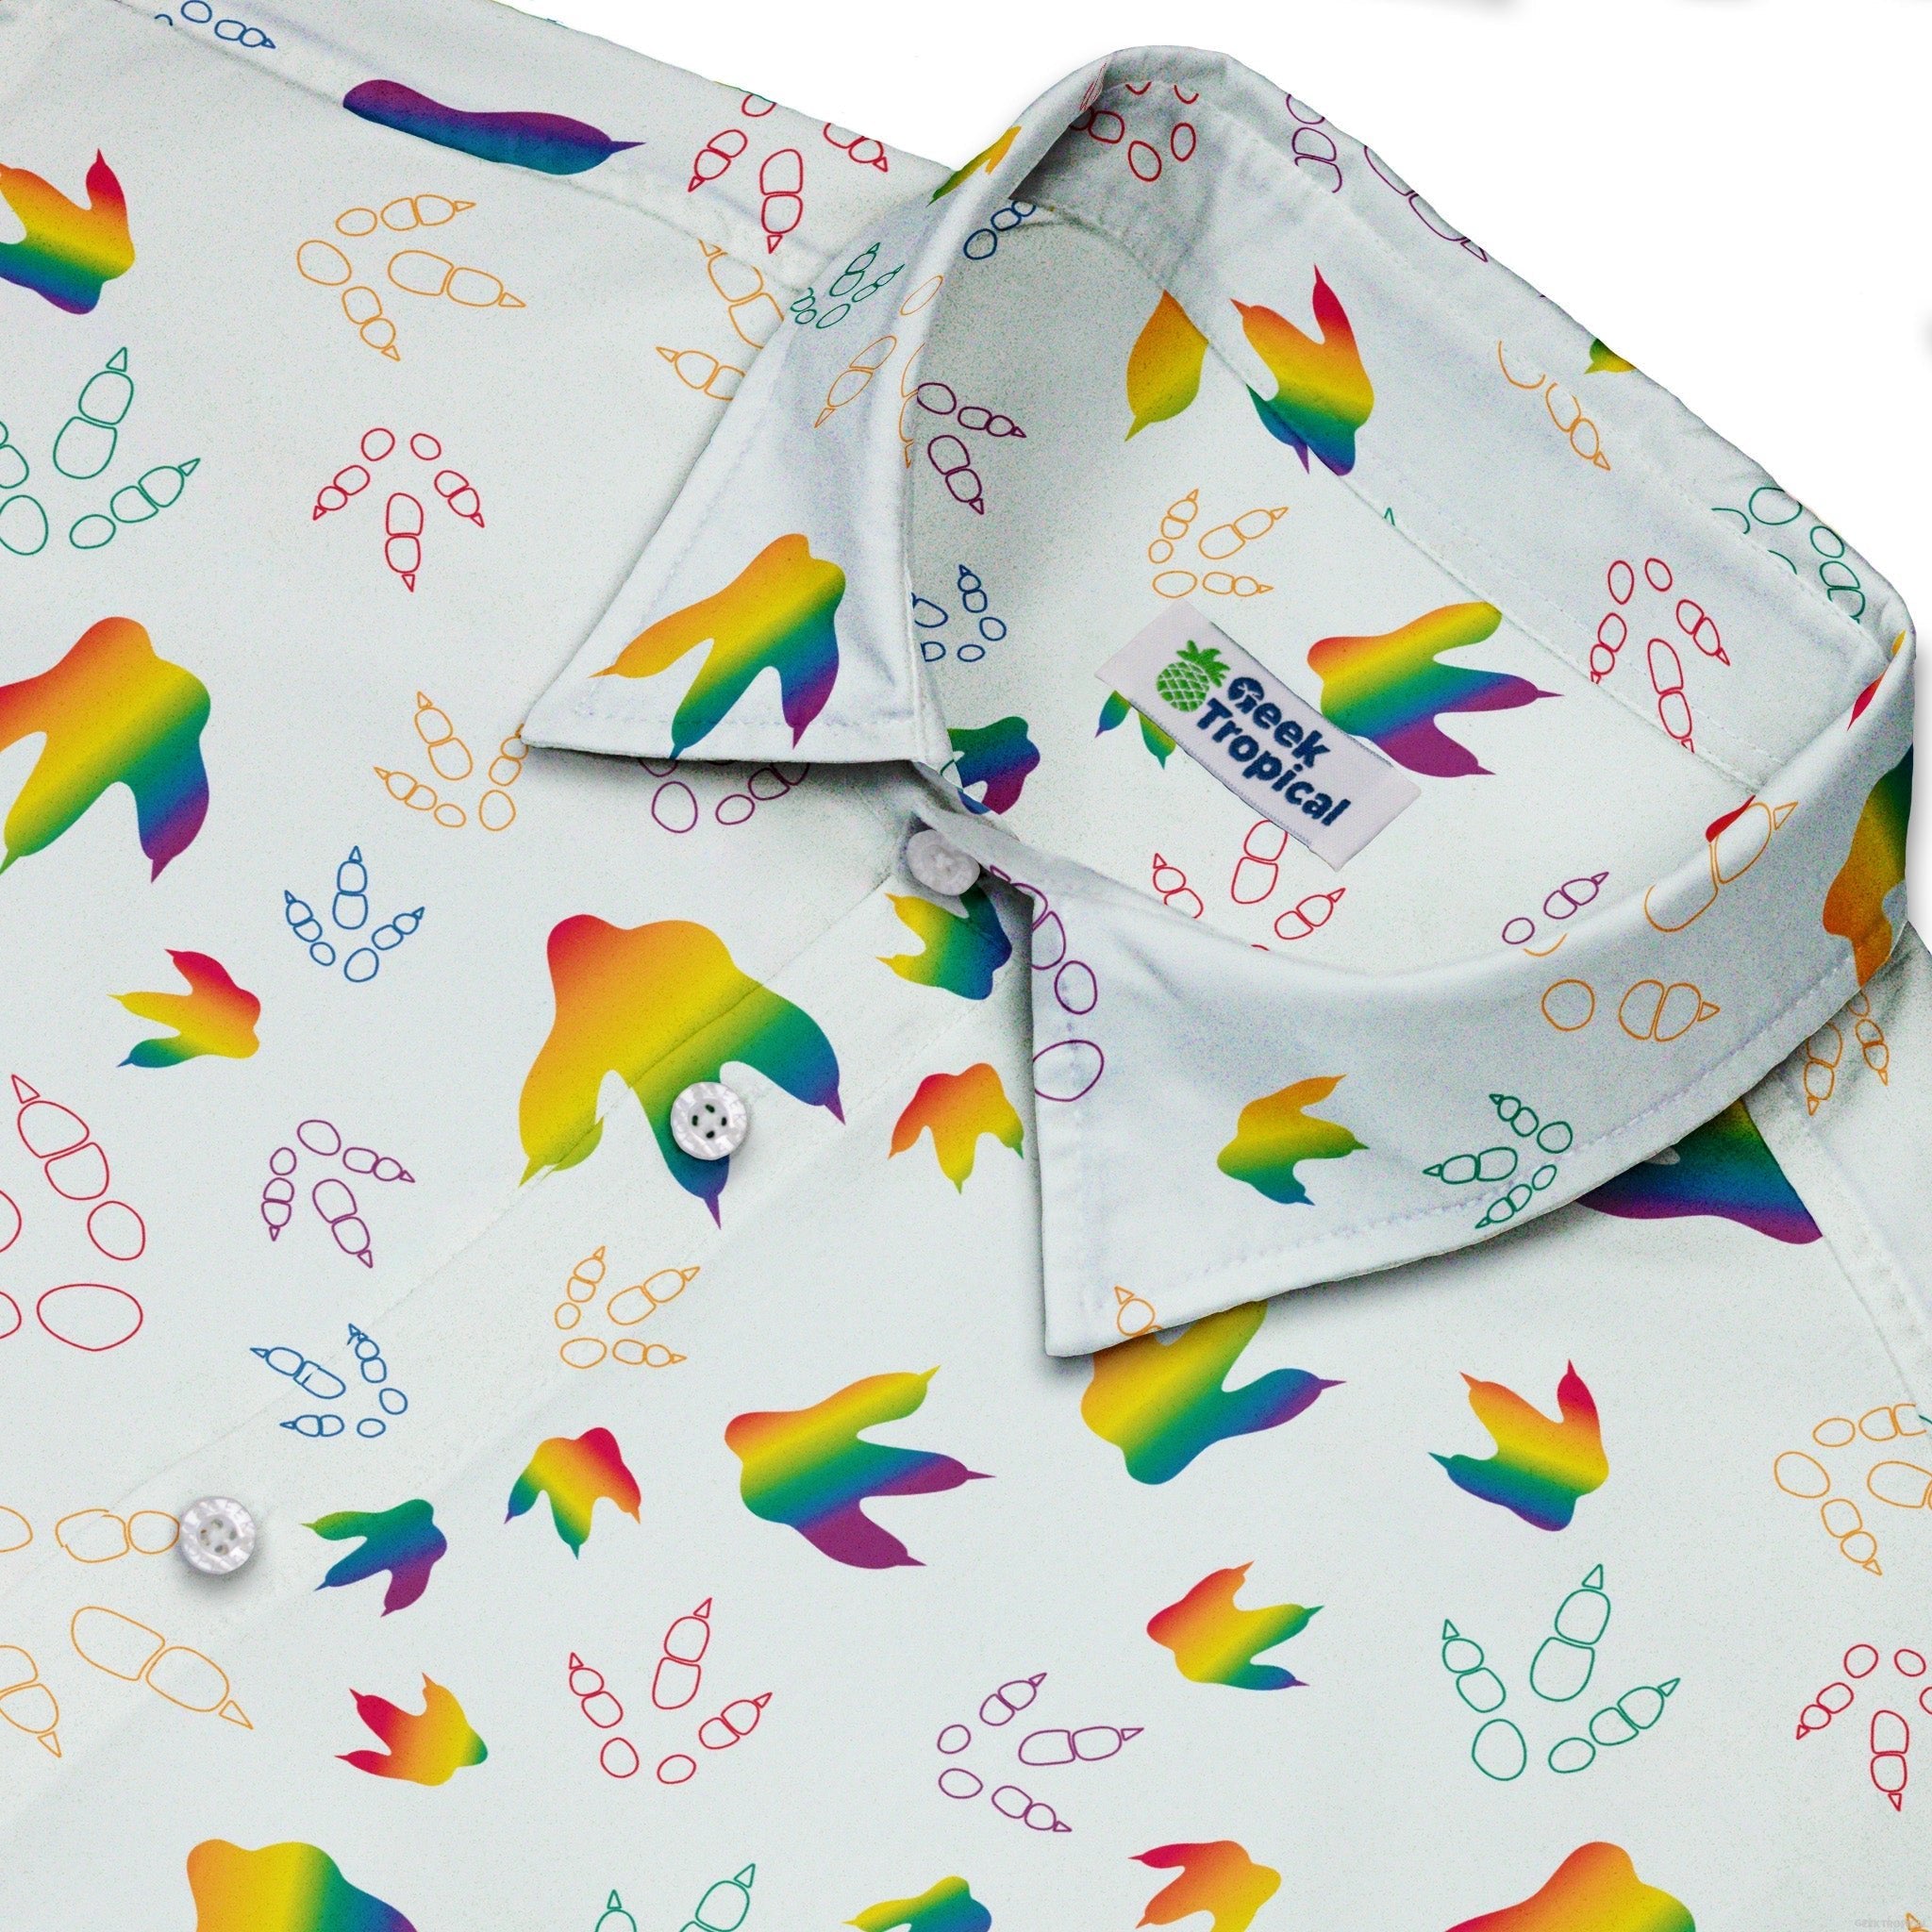 Dinosaur Footprints Rainbow Button Up Shirt - adult sizing - dinosaur print - Pride Patterns